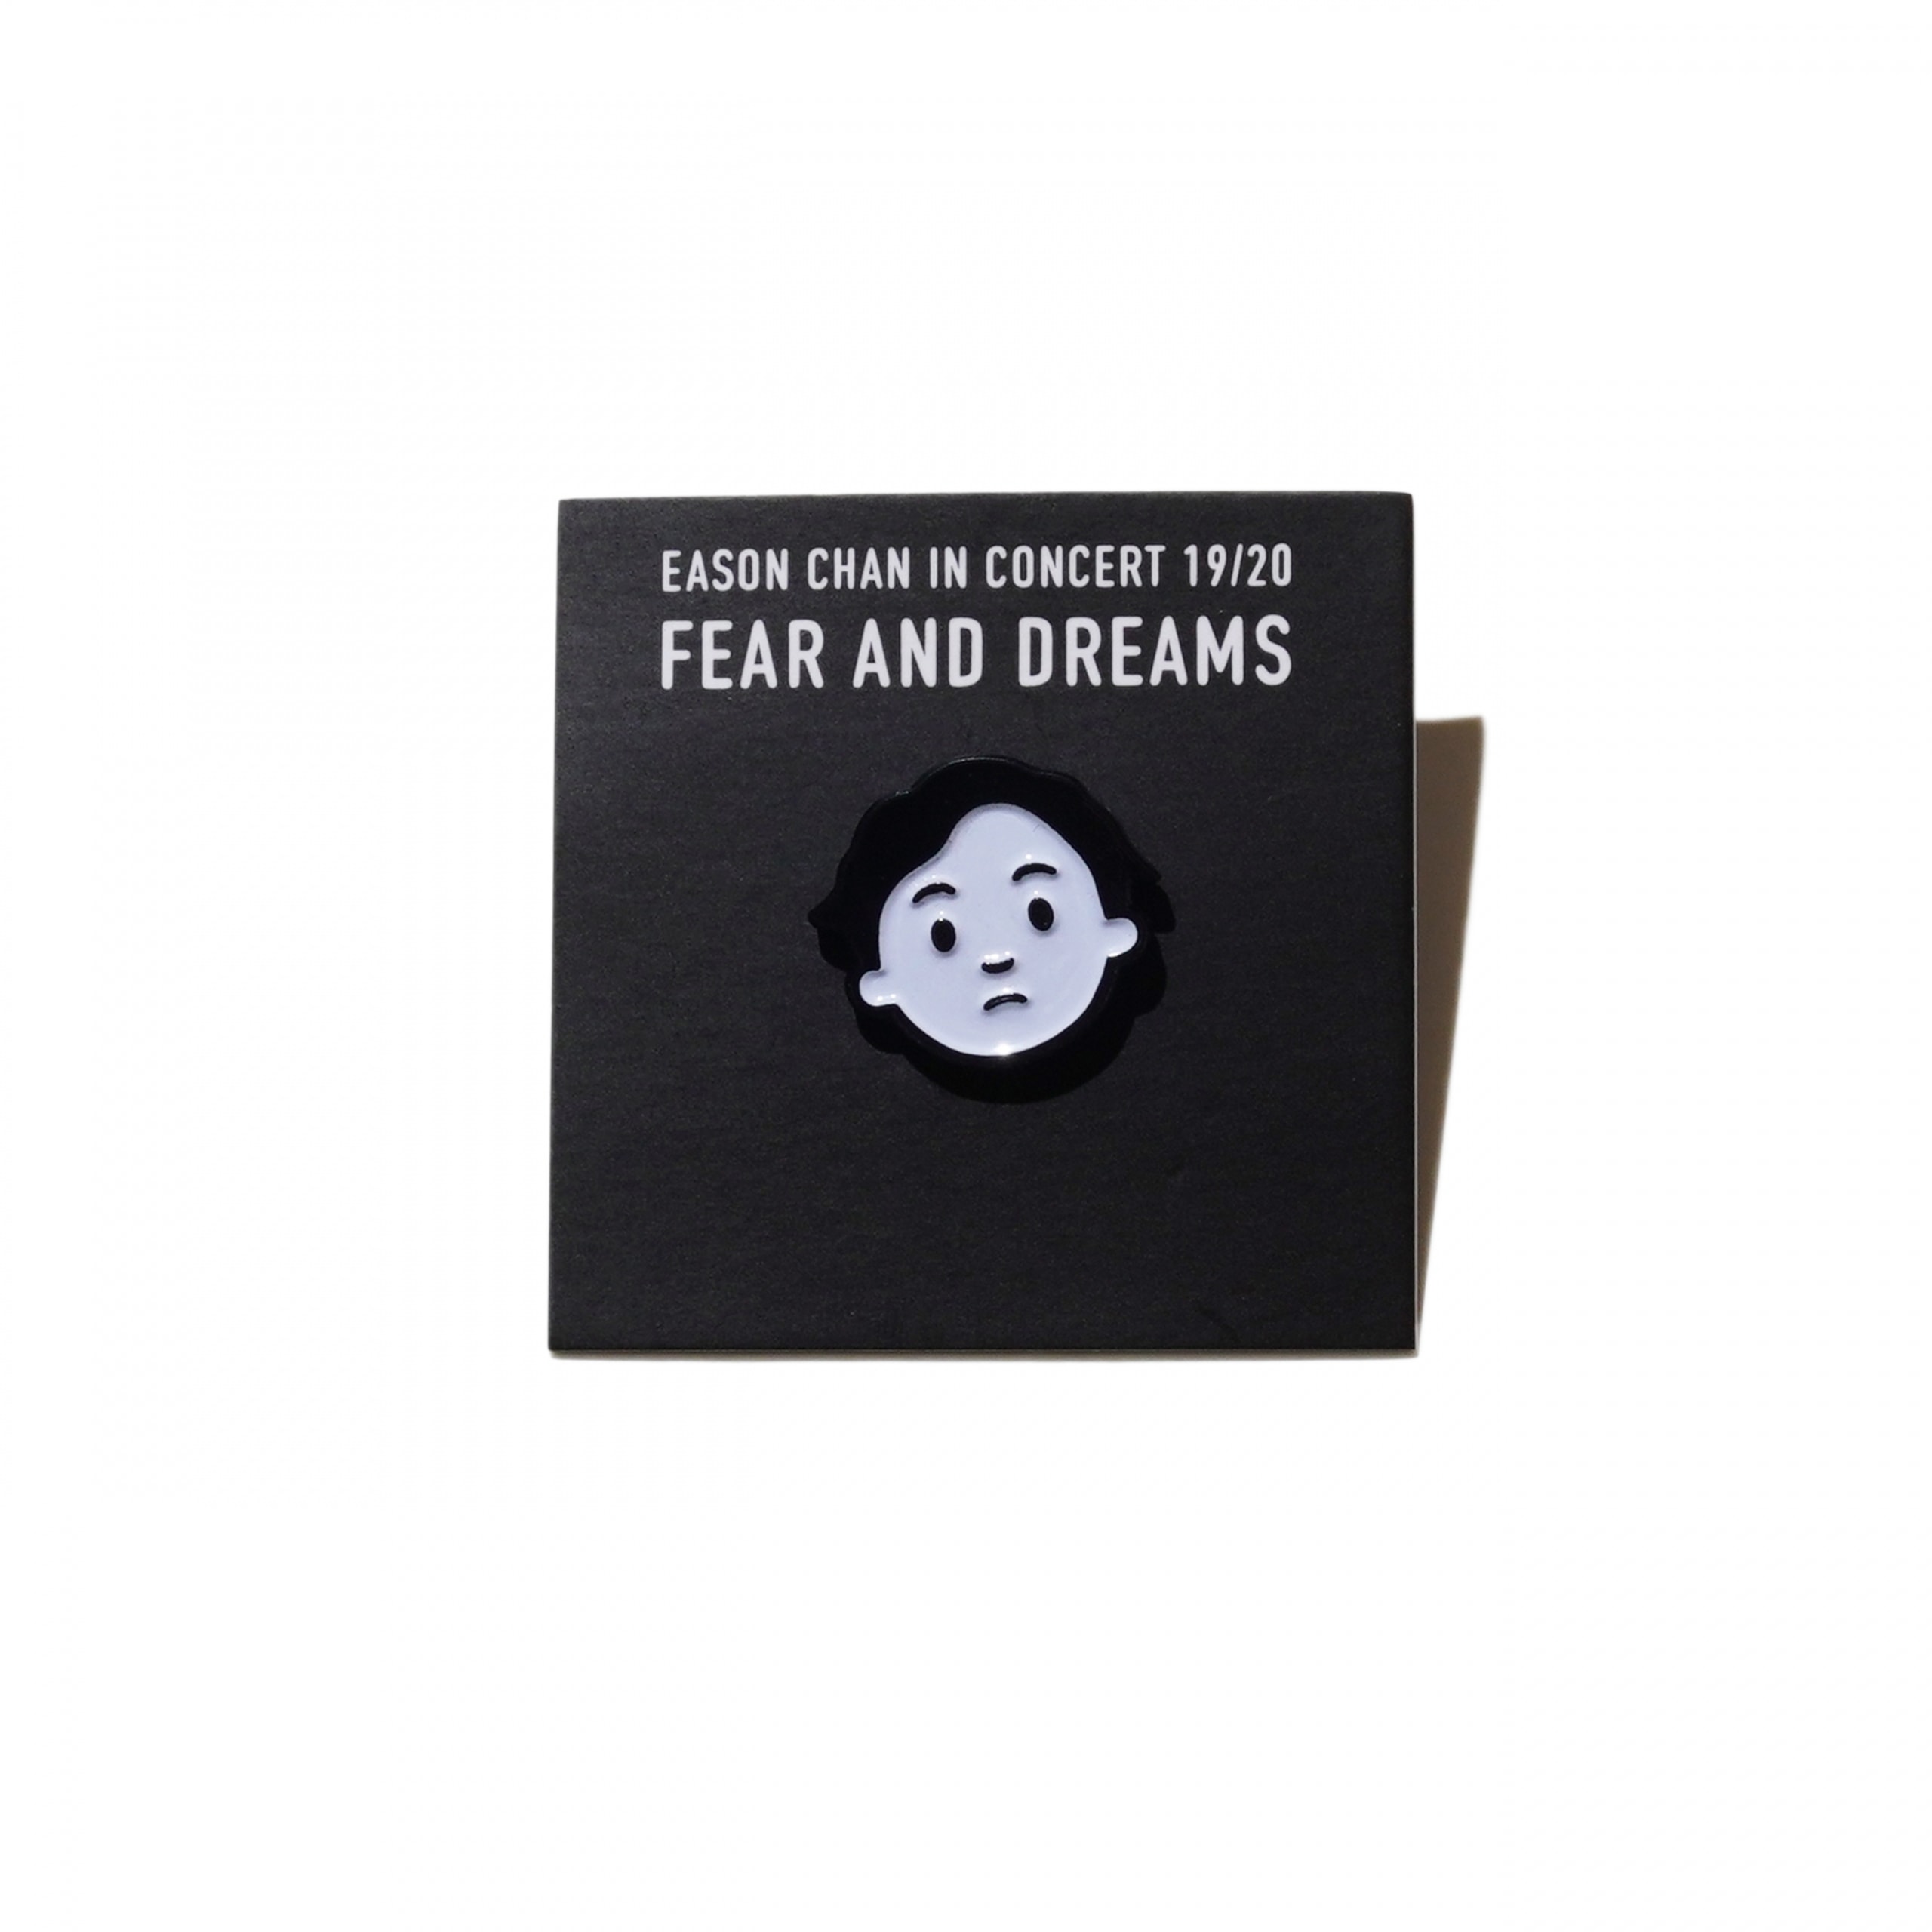 陳奕迅「Fear and Dreams 演唱會」紀念產品系列一覽